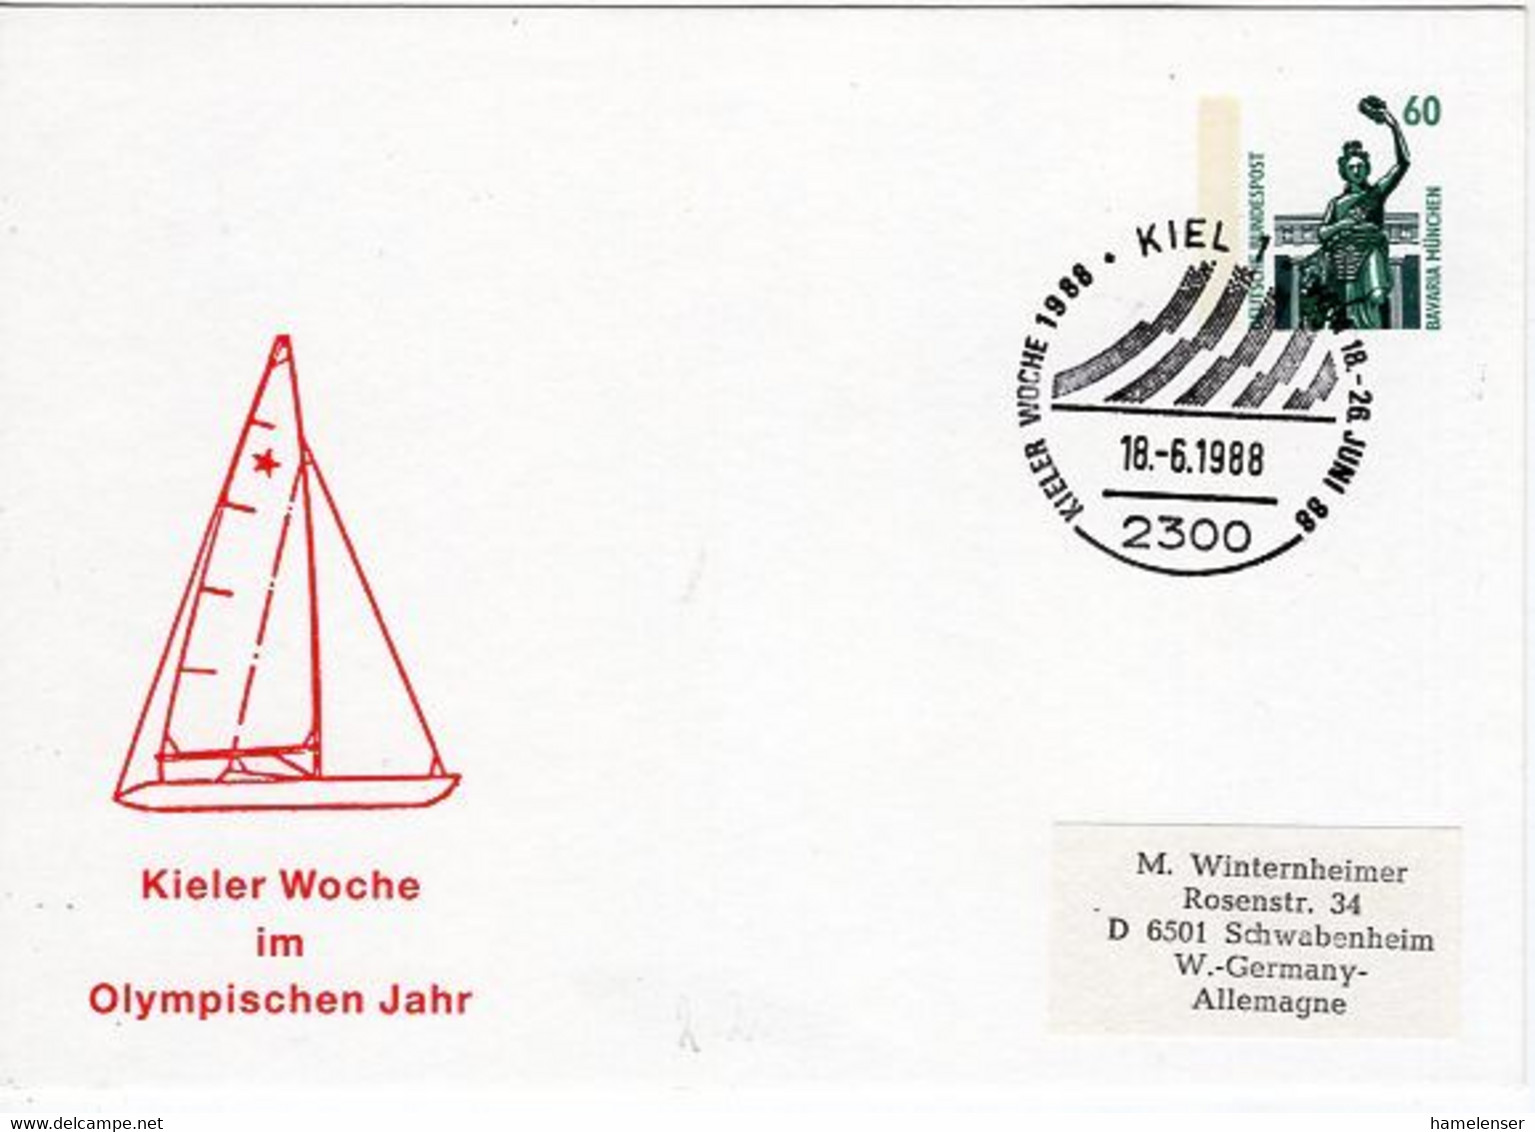 53704 - Bund - 1988 - 60Pfg SWK PGAKte "Kieler Woche" SoStpl KIEL - KIELER WOCHE -> Schwabenheim - Voile